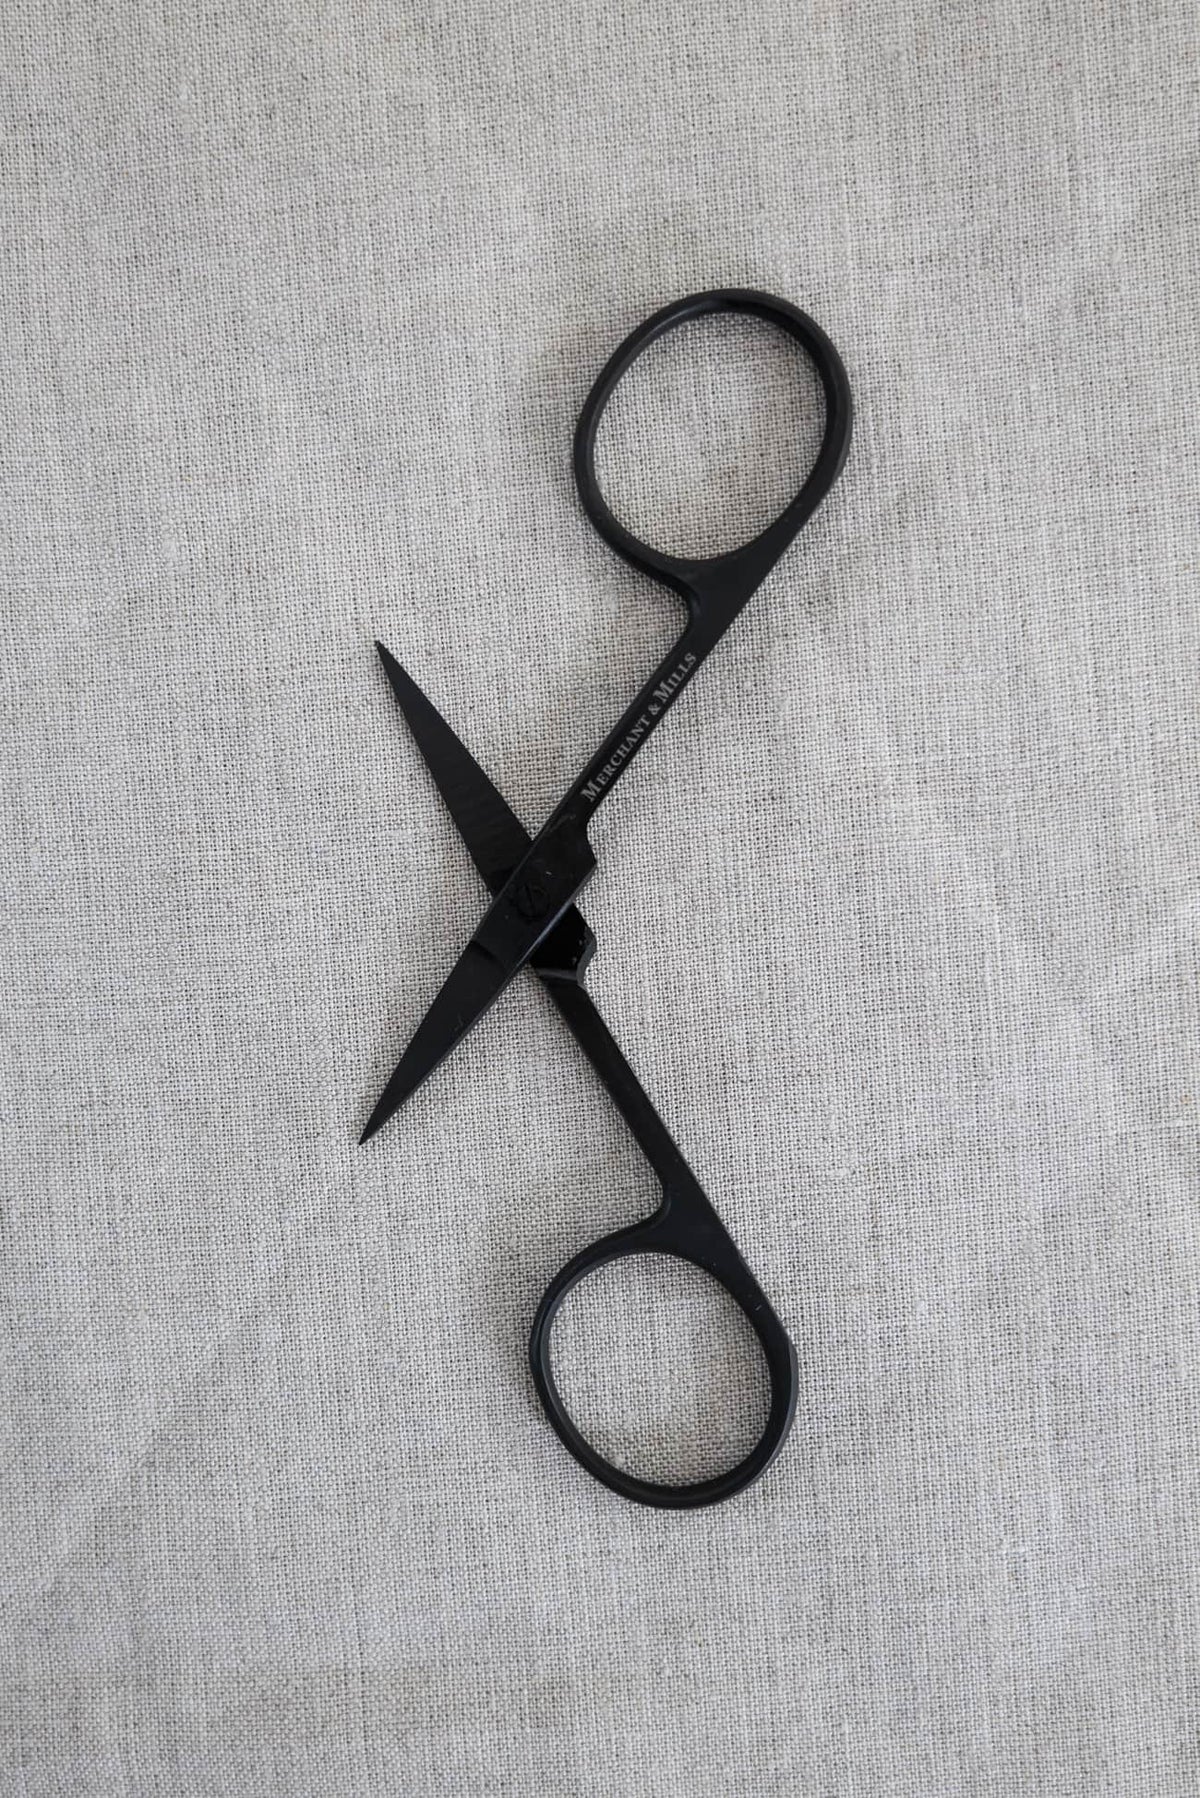 Wide Bow Bow Scissors - Marcy Tilton Fabrics